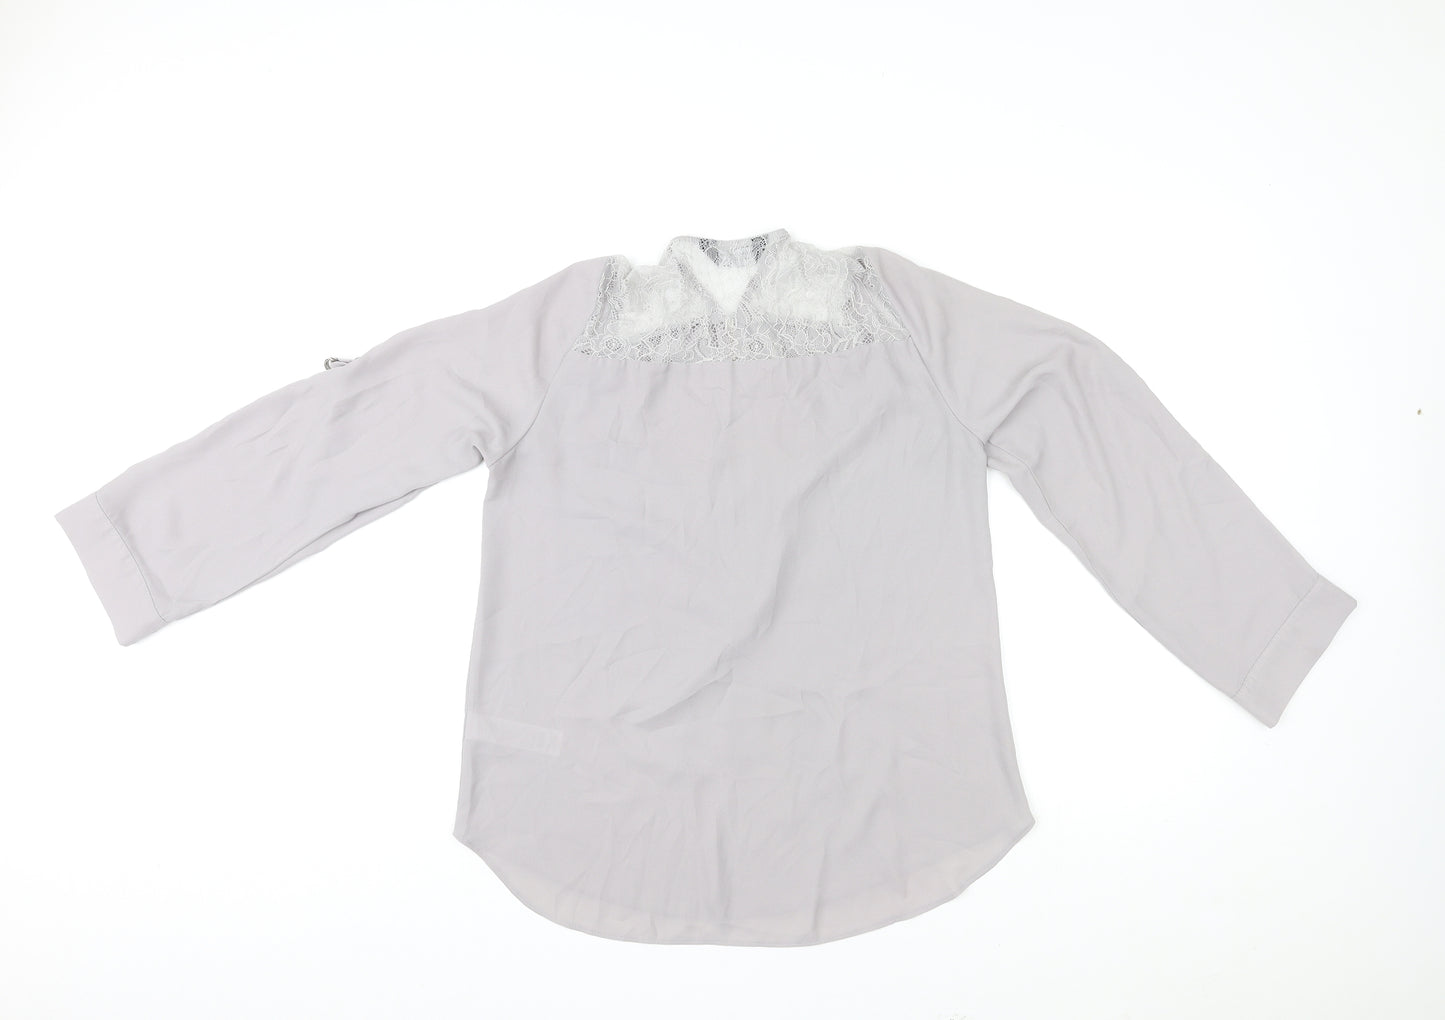 Dorothy Perkins Womens Grey Polyester Basic Blouse Size 12 V-Neck - Lace Trim